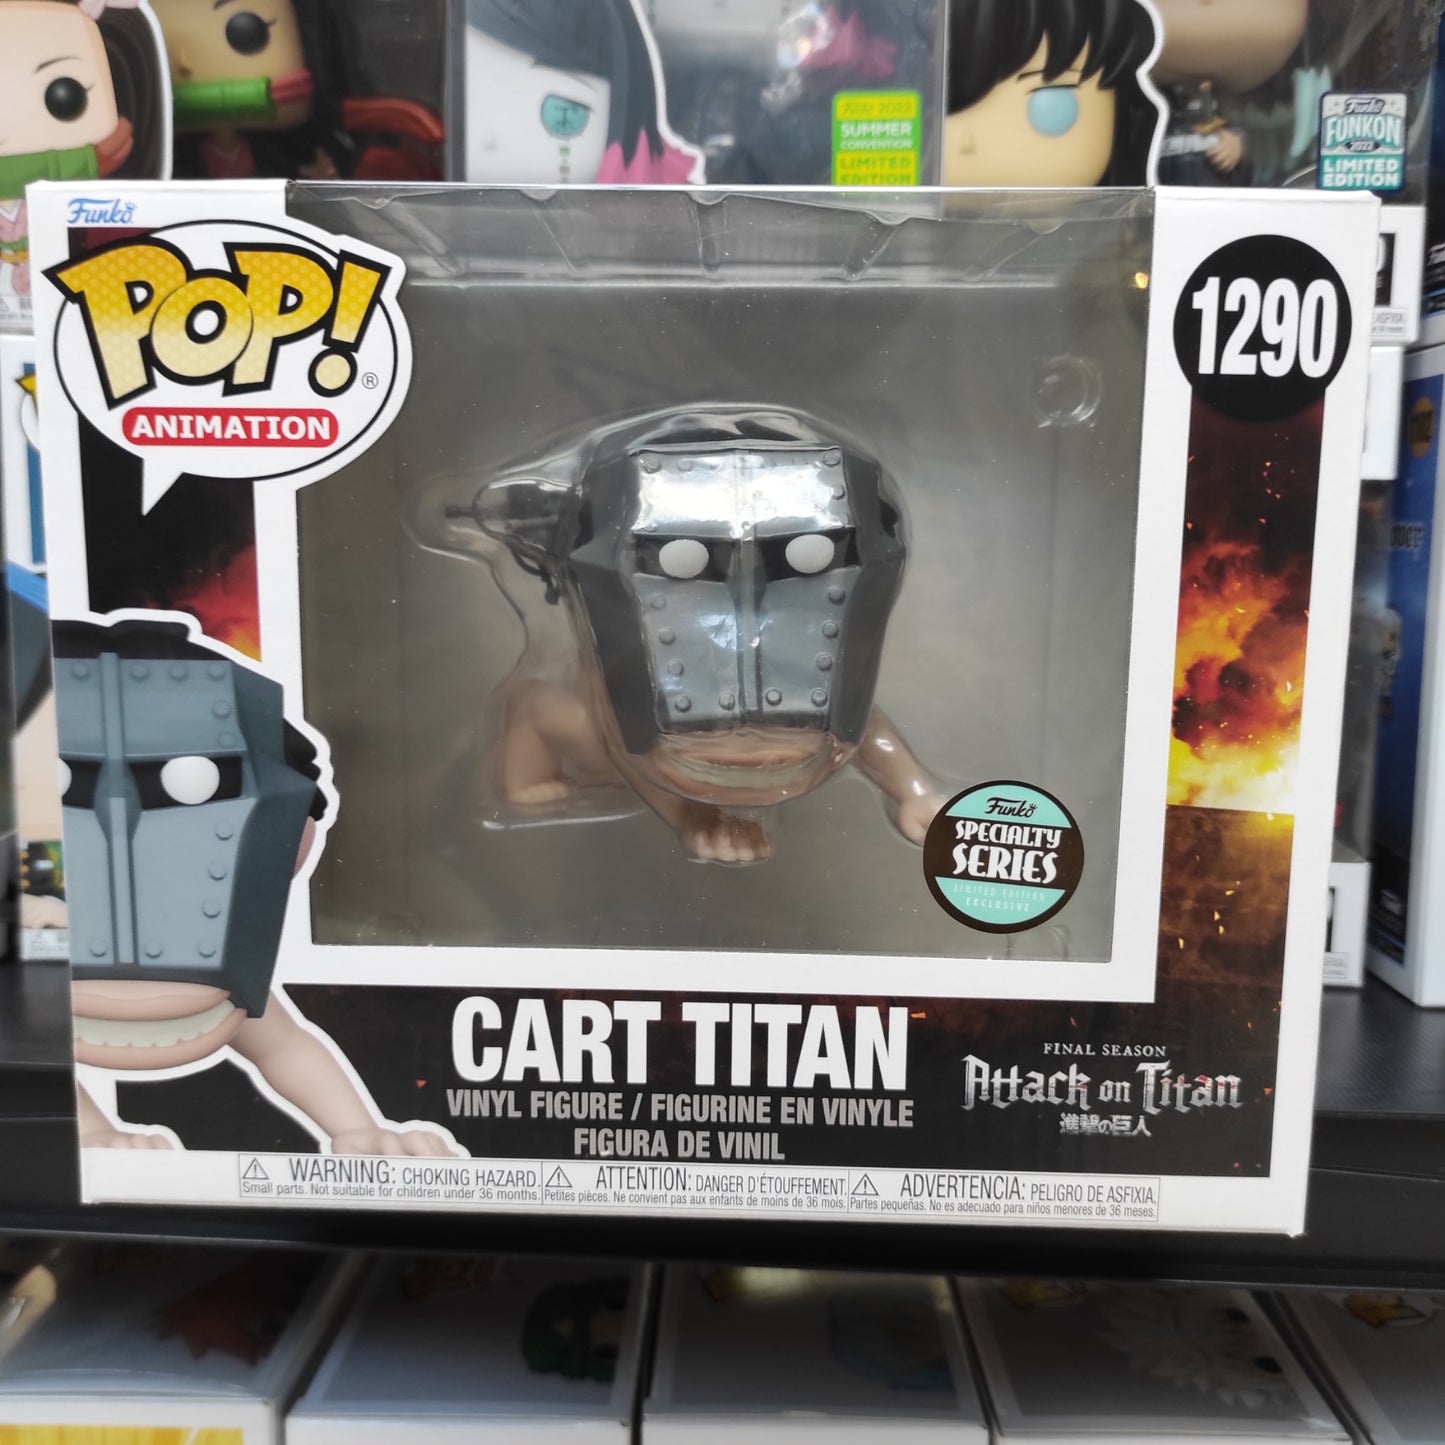 Attack On Titan - Cart Titan "Speciality Series"